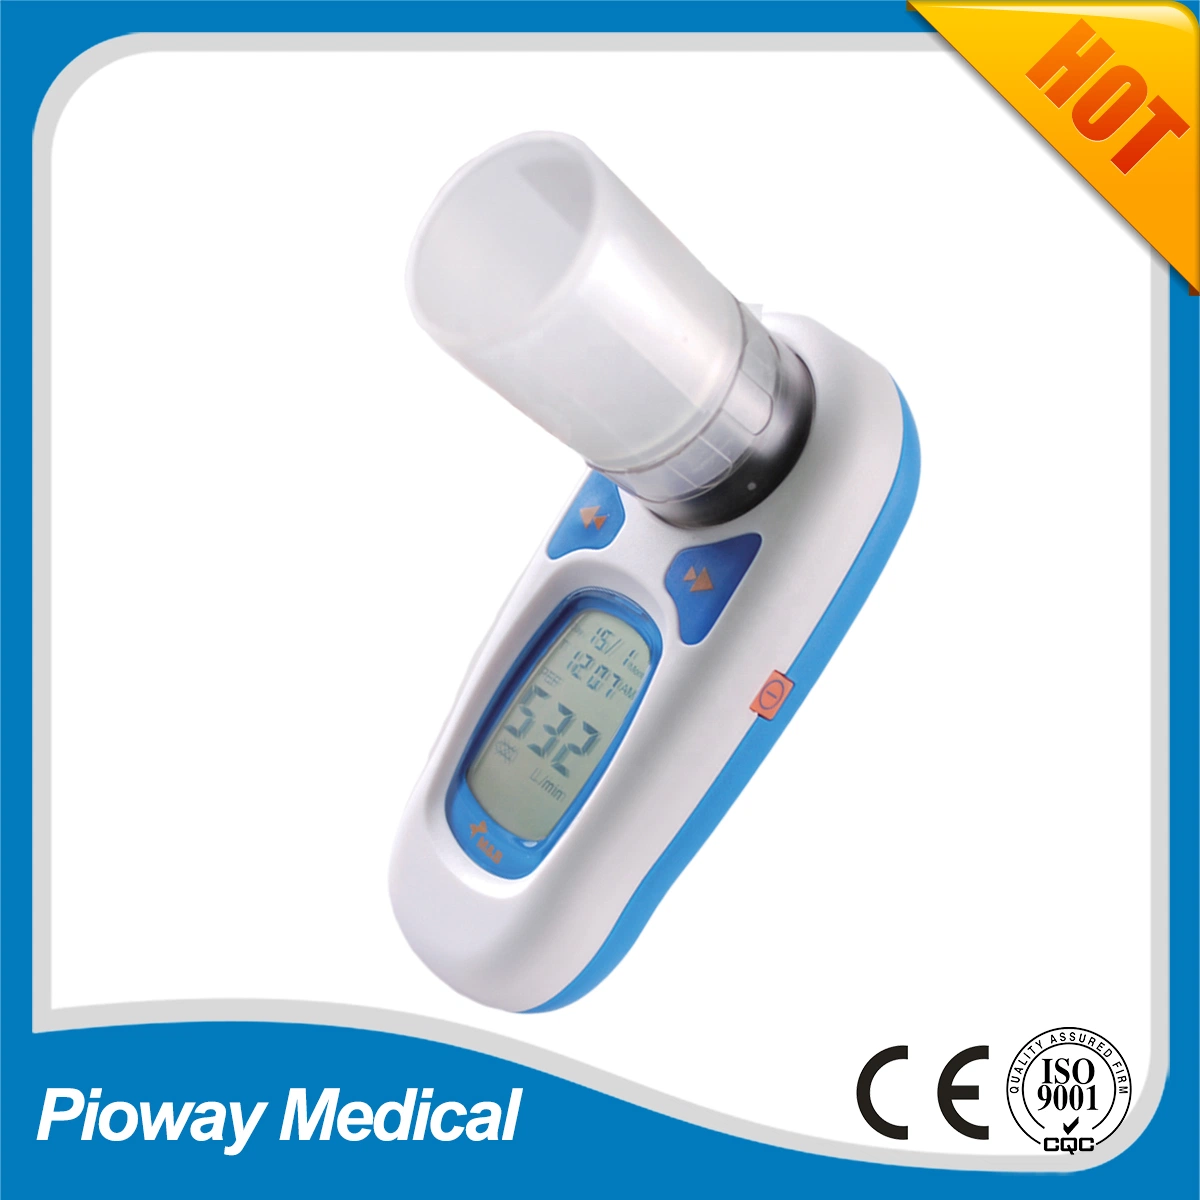 Portable Peak Flow Meter, Digital Spirometer (MSA100)